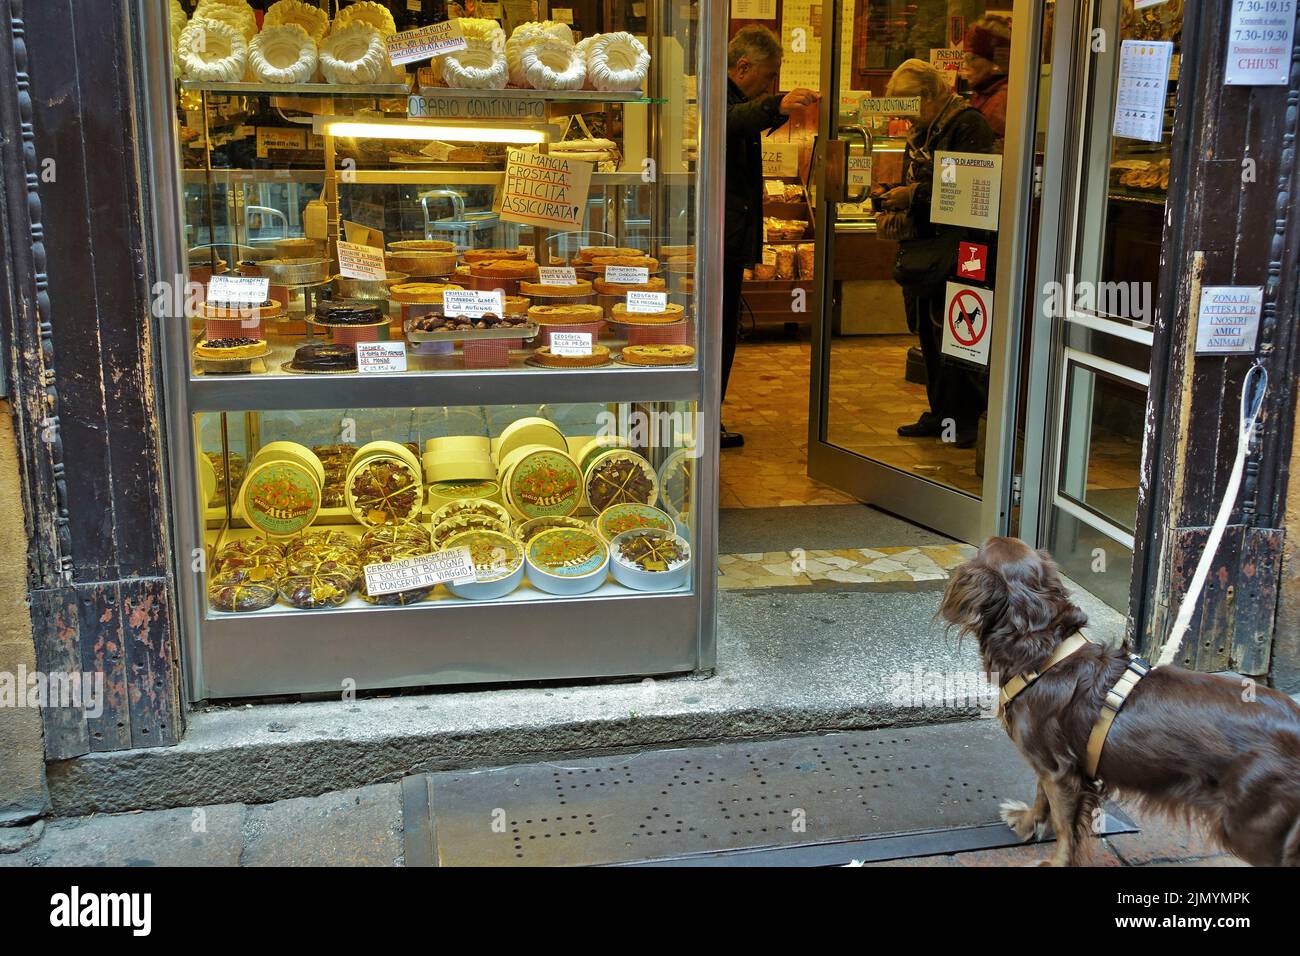 Dog tied on leash, Paolo Atti bread shop, Bologna, Emilia Romagna, Italy, Europe Stock Photo